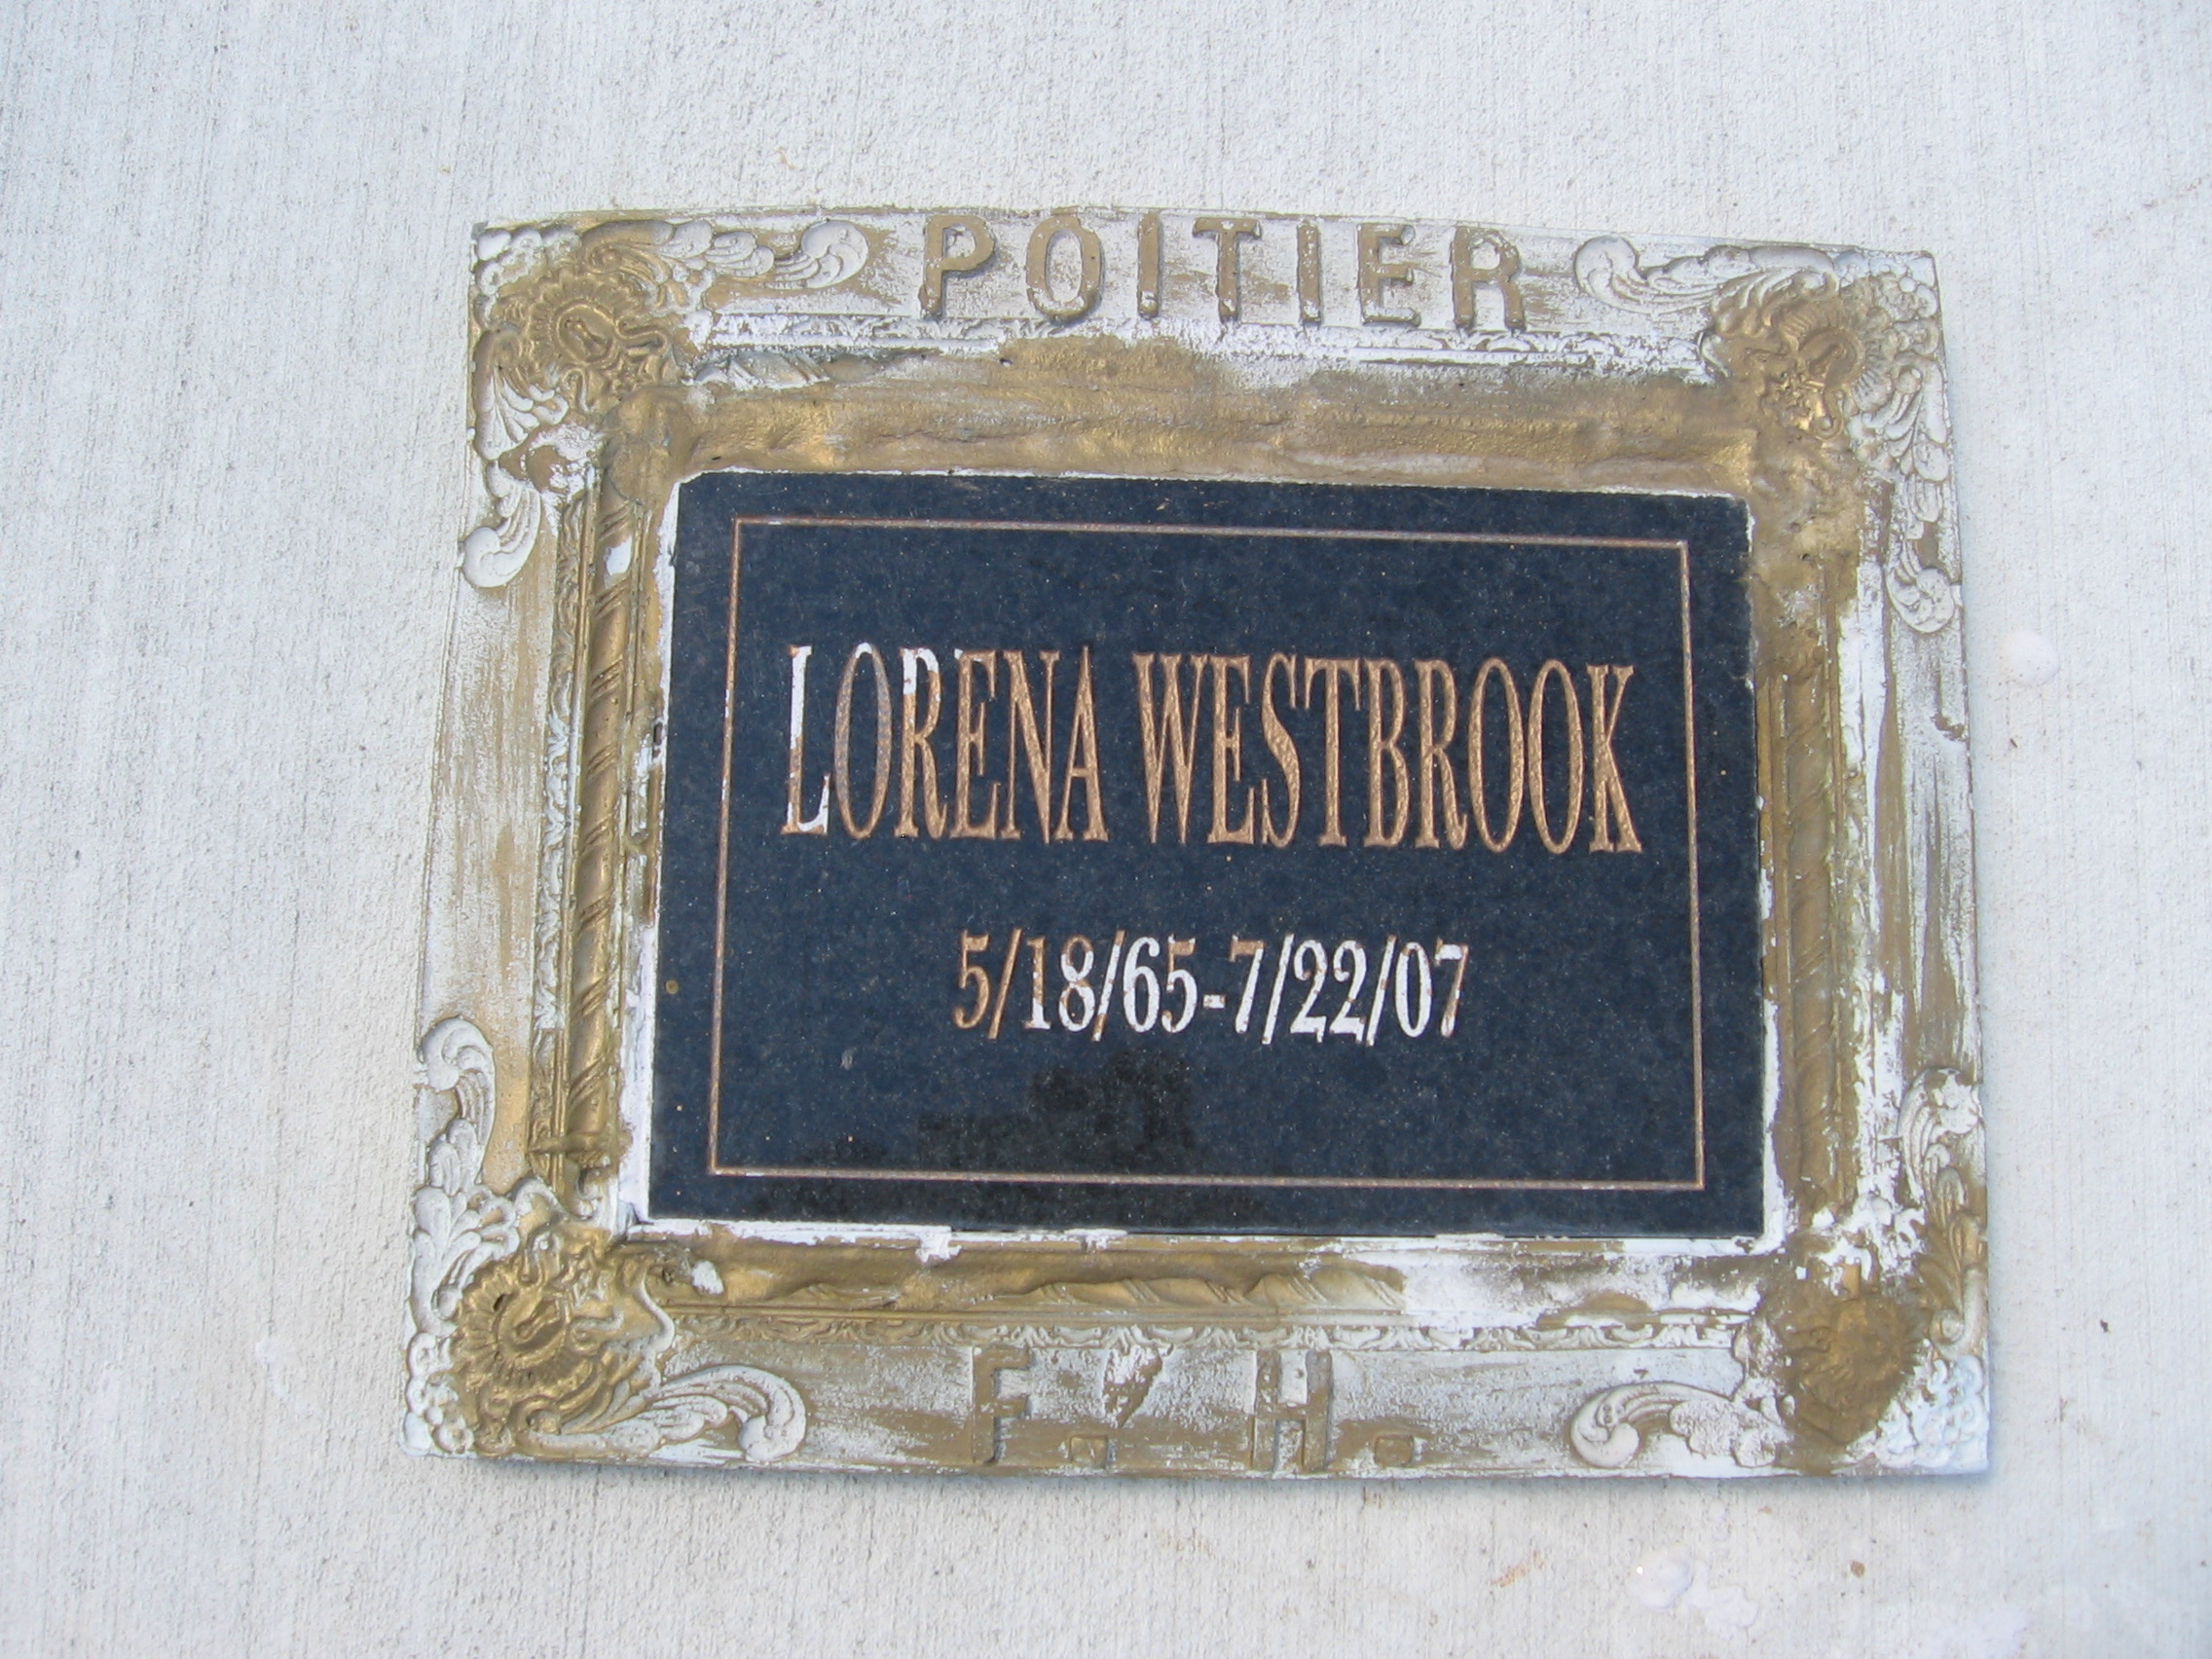 Lorena Westbrook